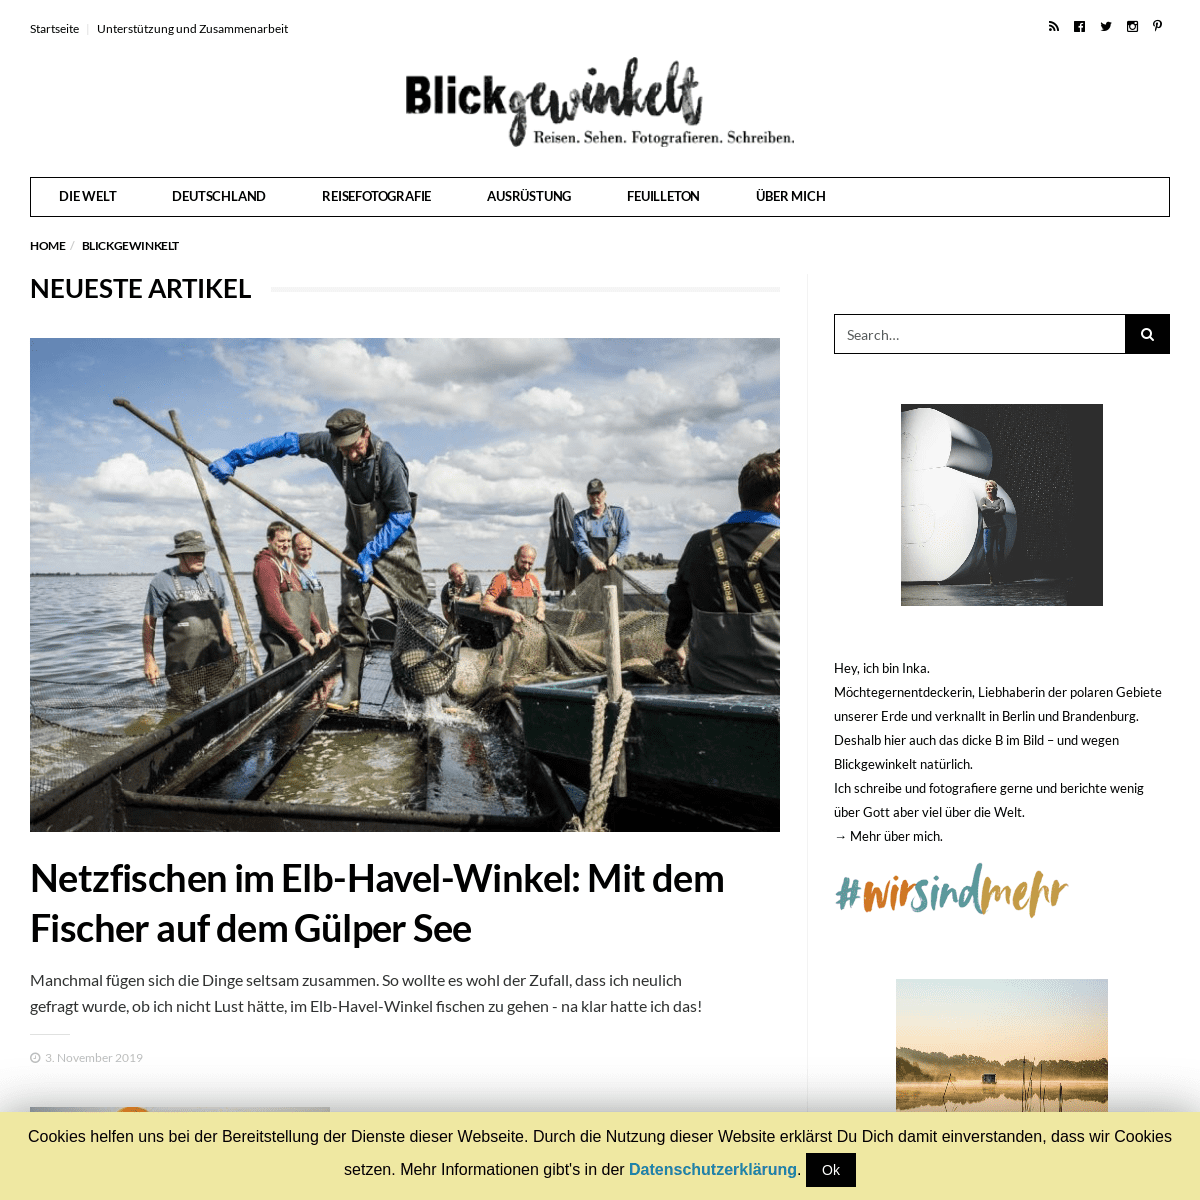 A complete backup of blickgewinkelt.de